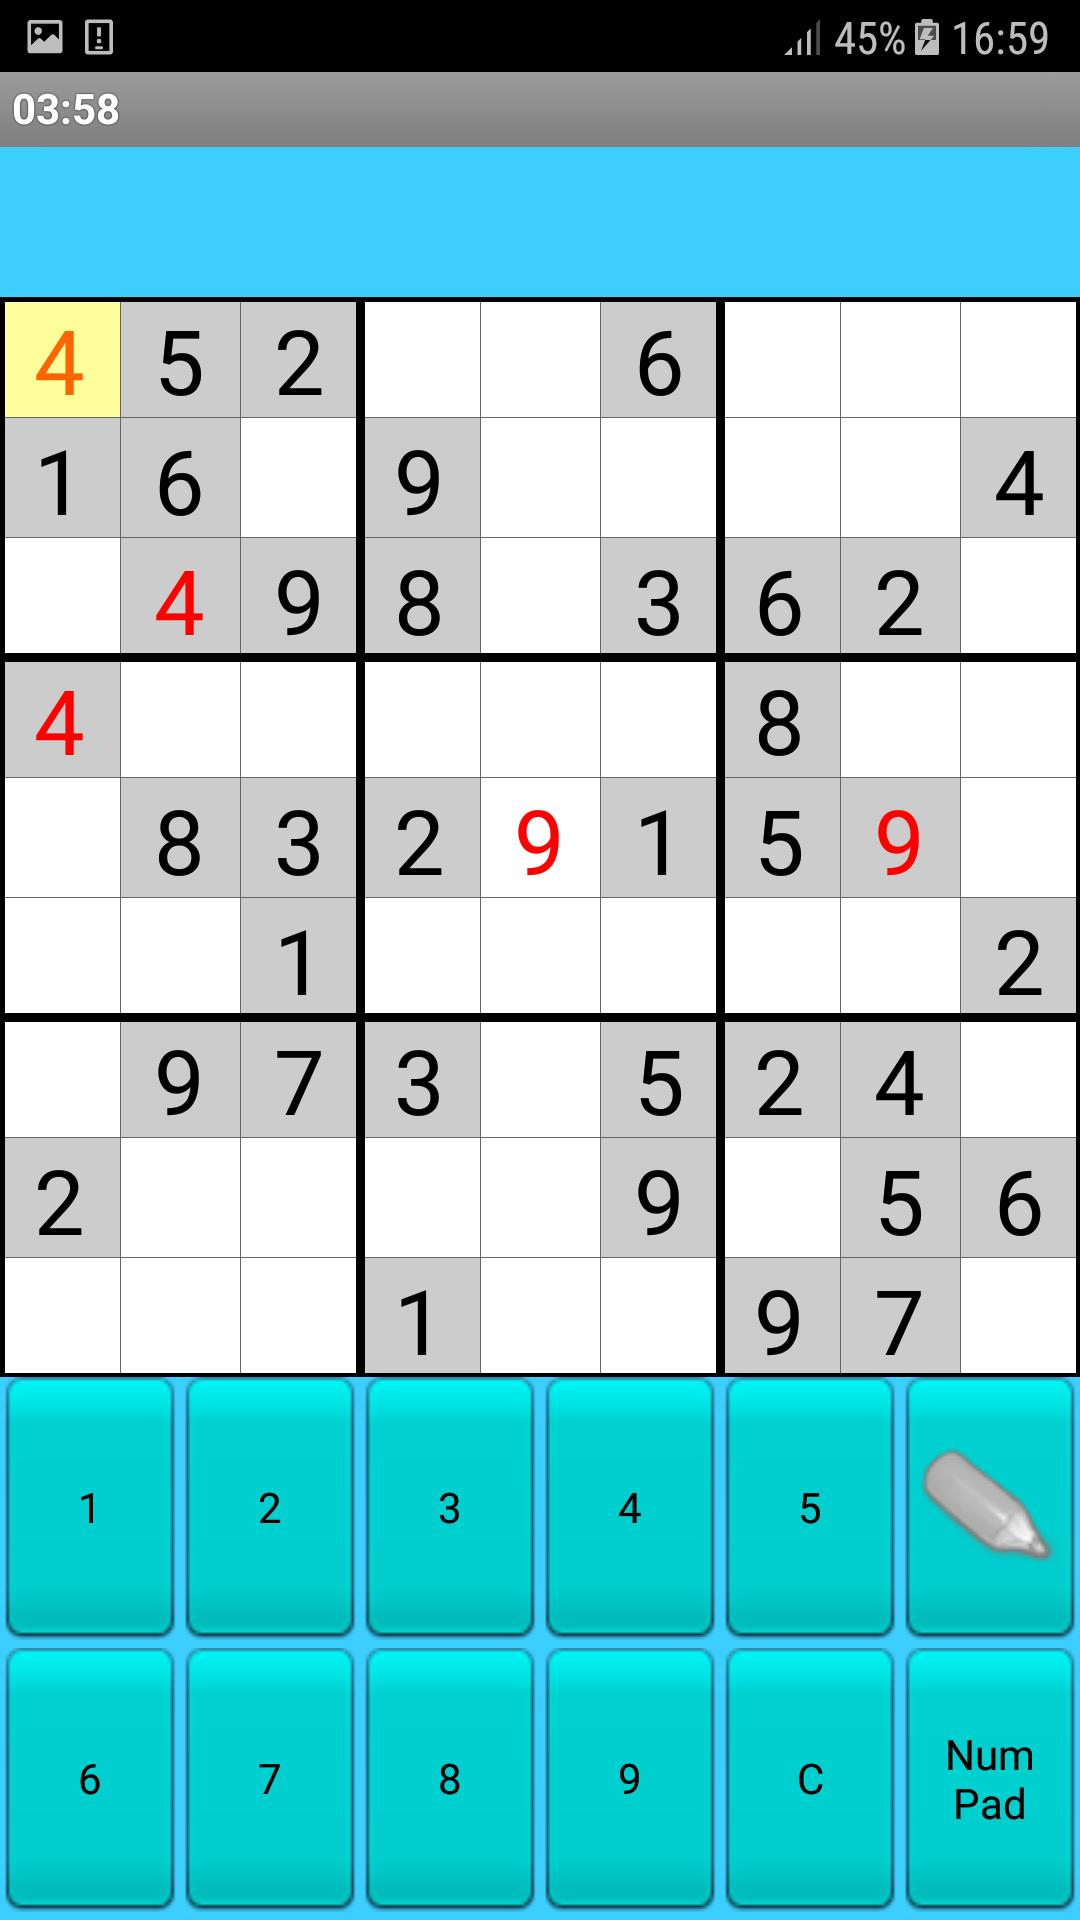 Livewire Puzzles Free Printable Sudoku